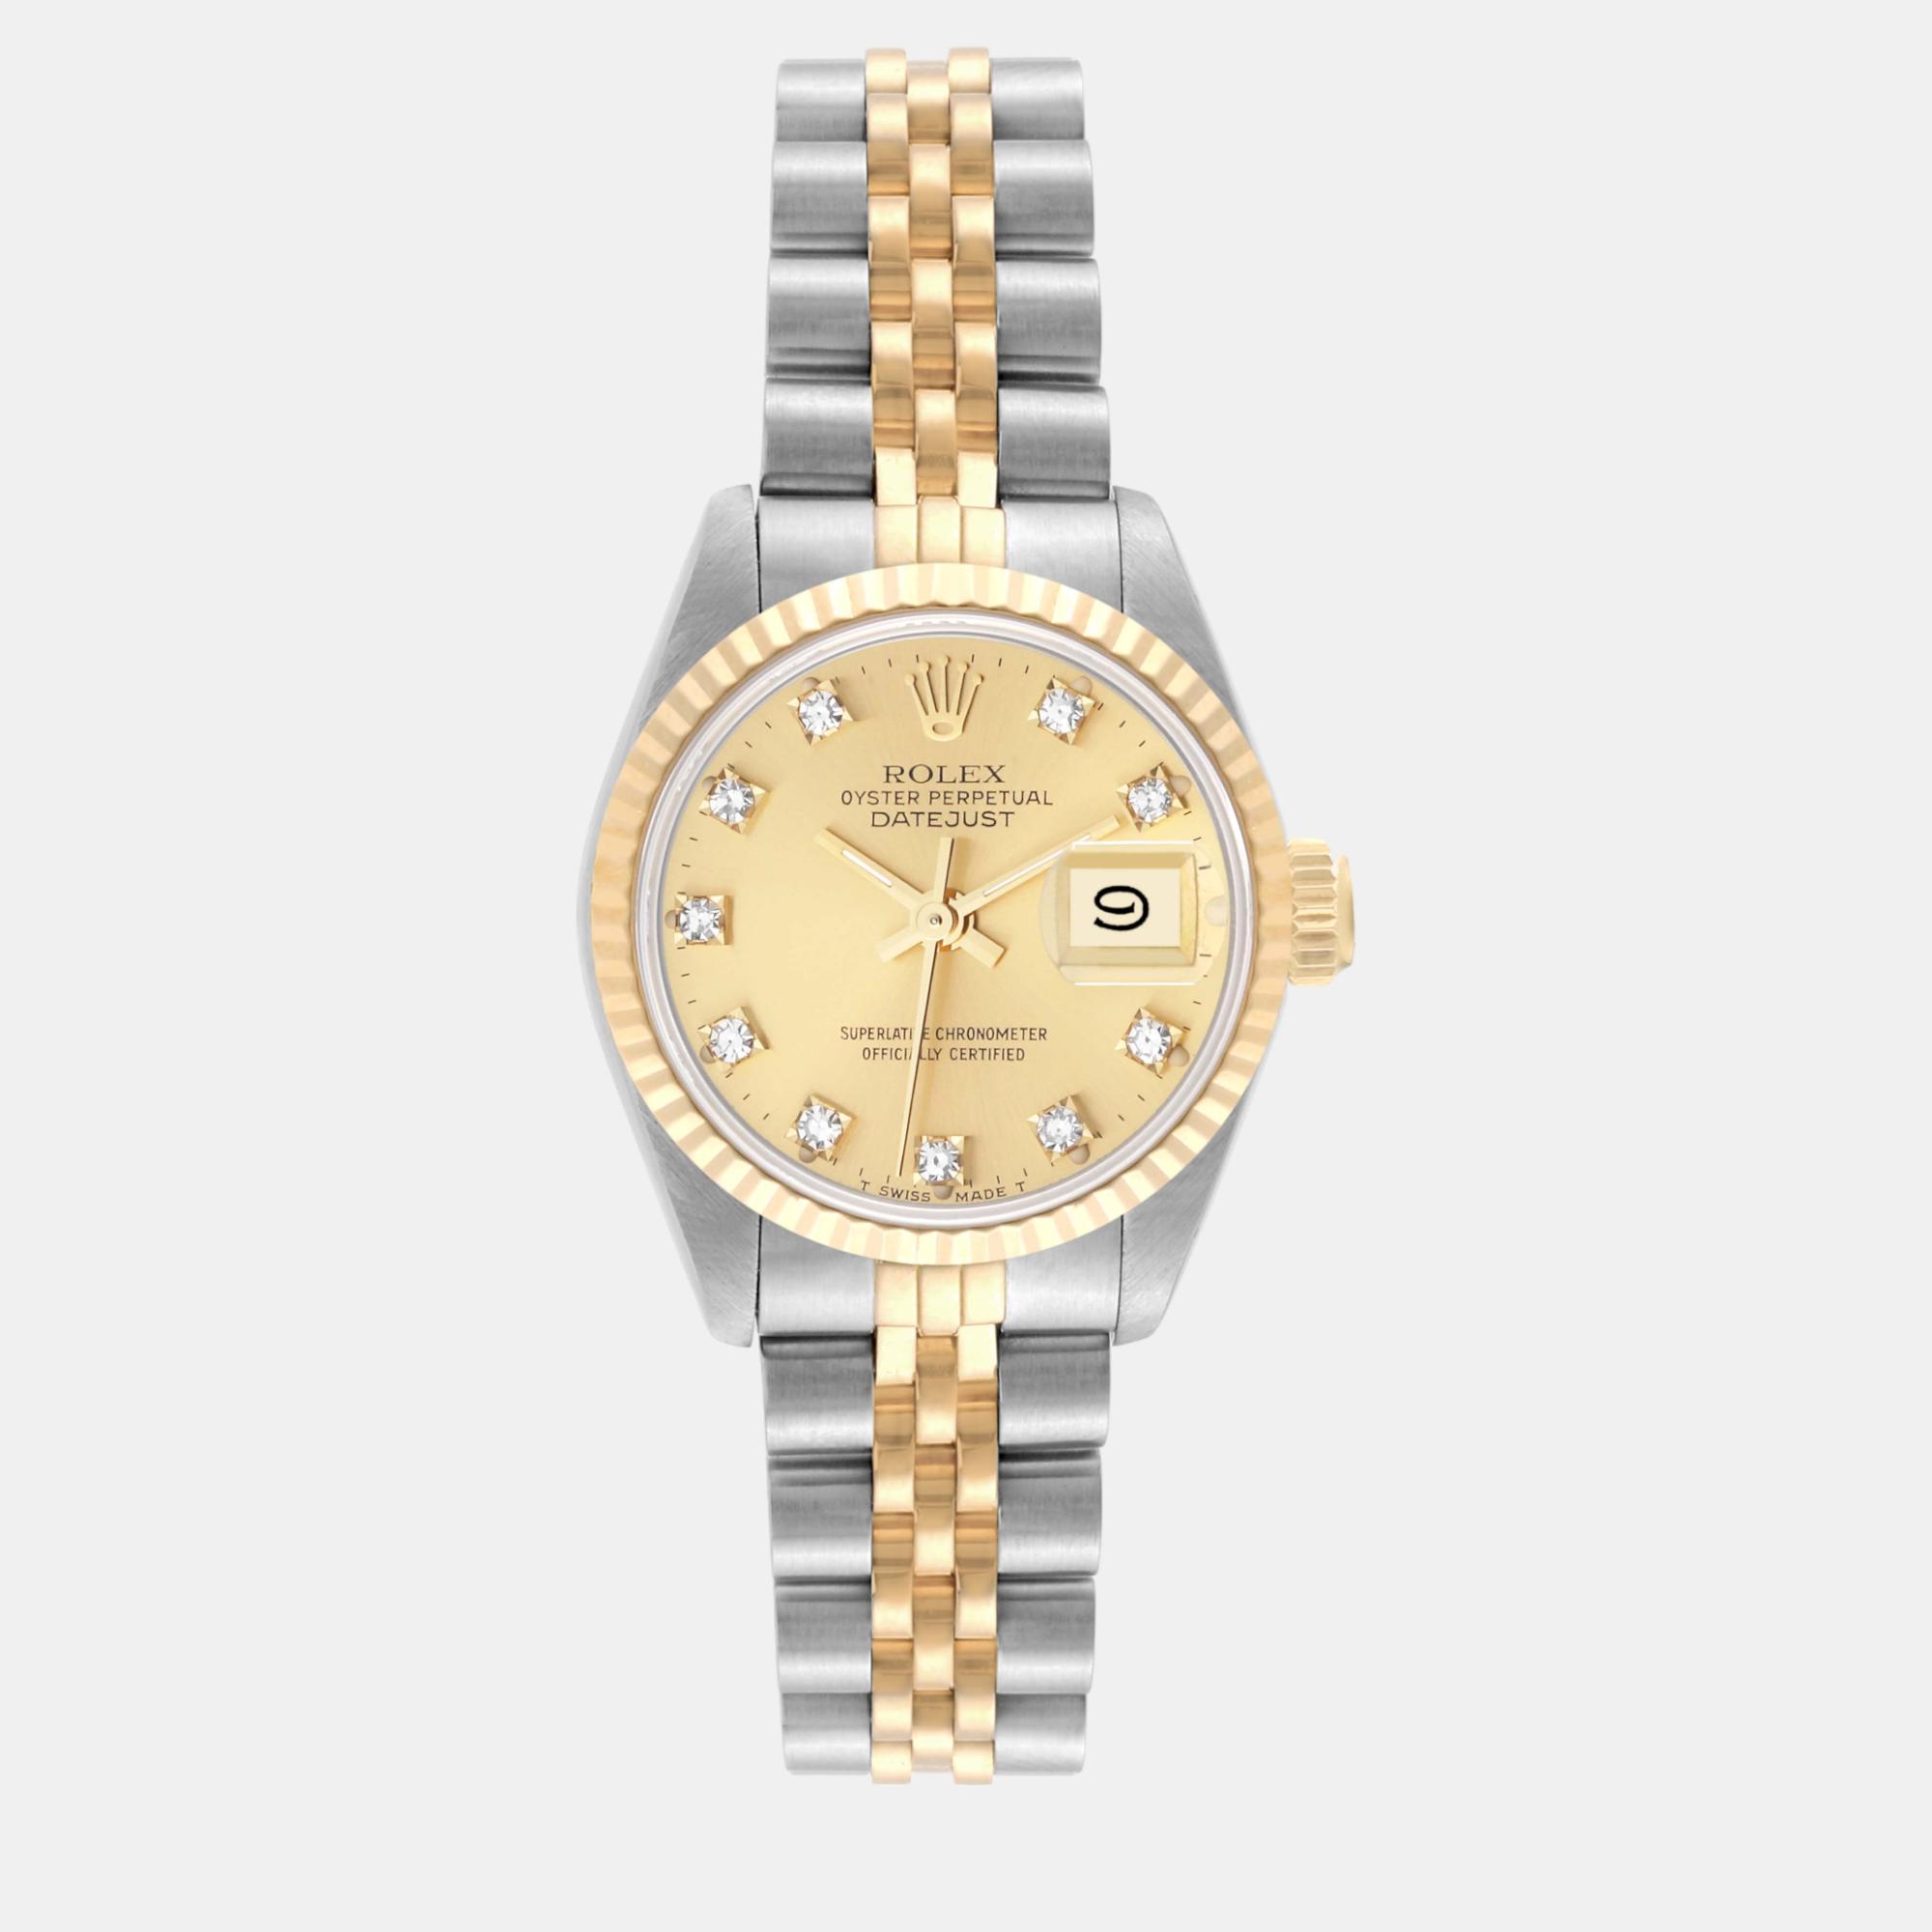 Rolex datejust diamond dial steel yellow gold ladies watch 69173 26 mm